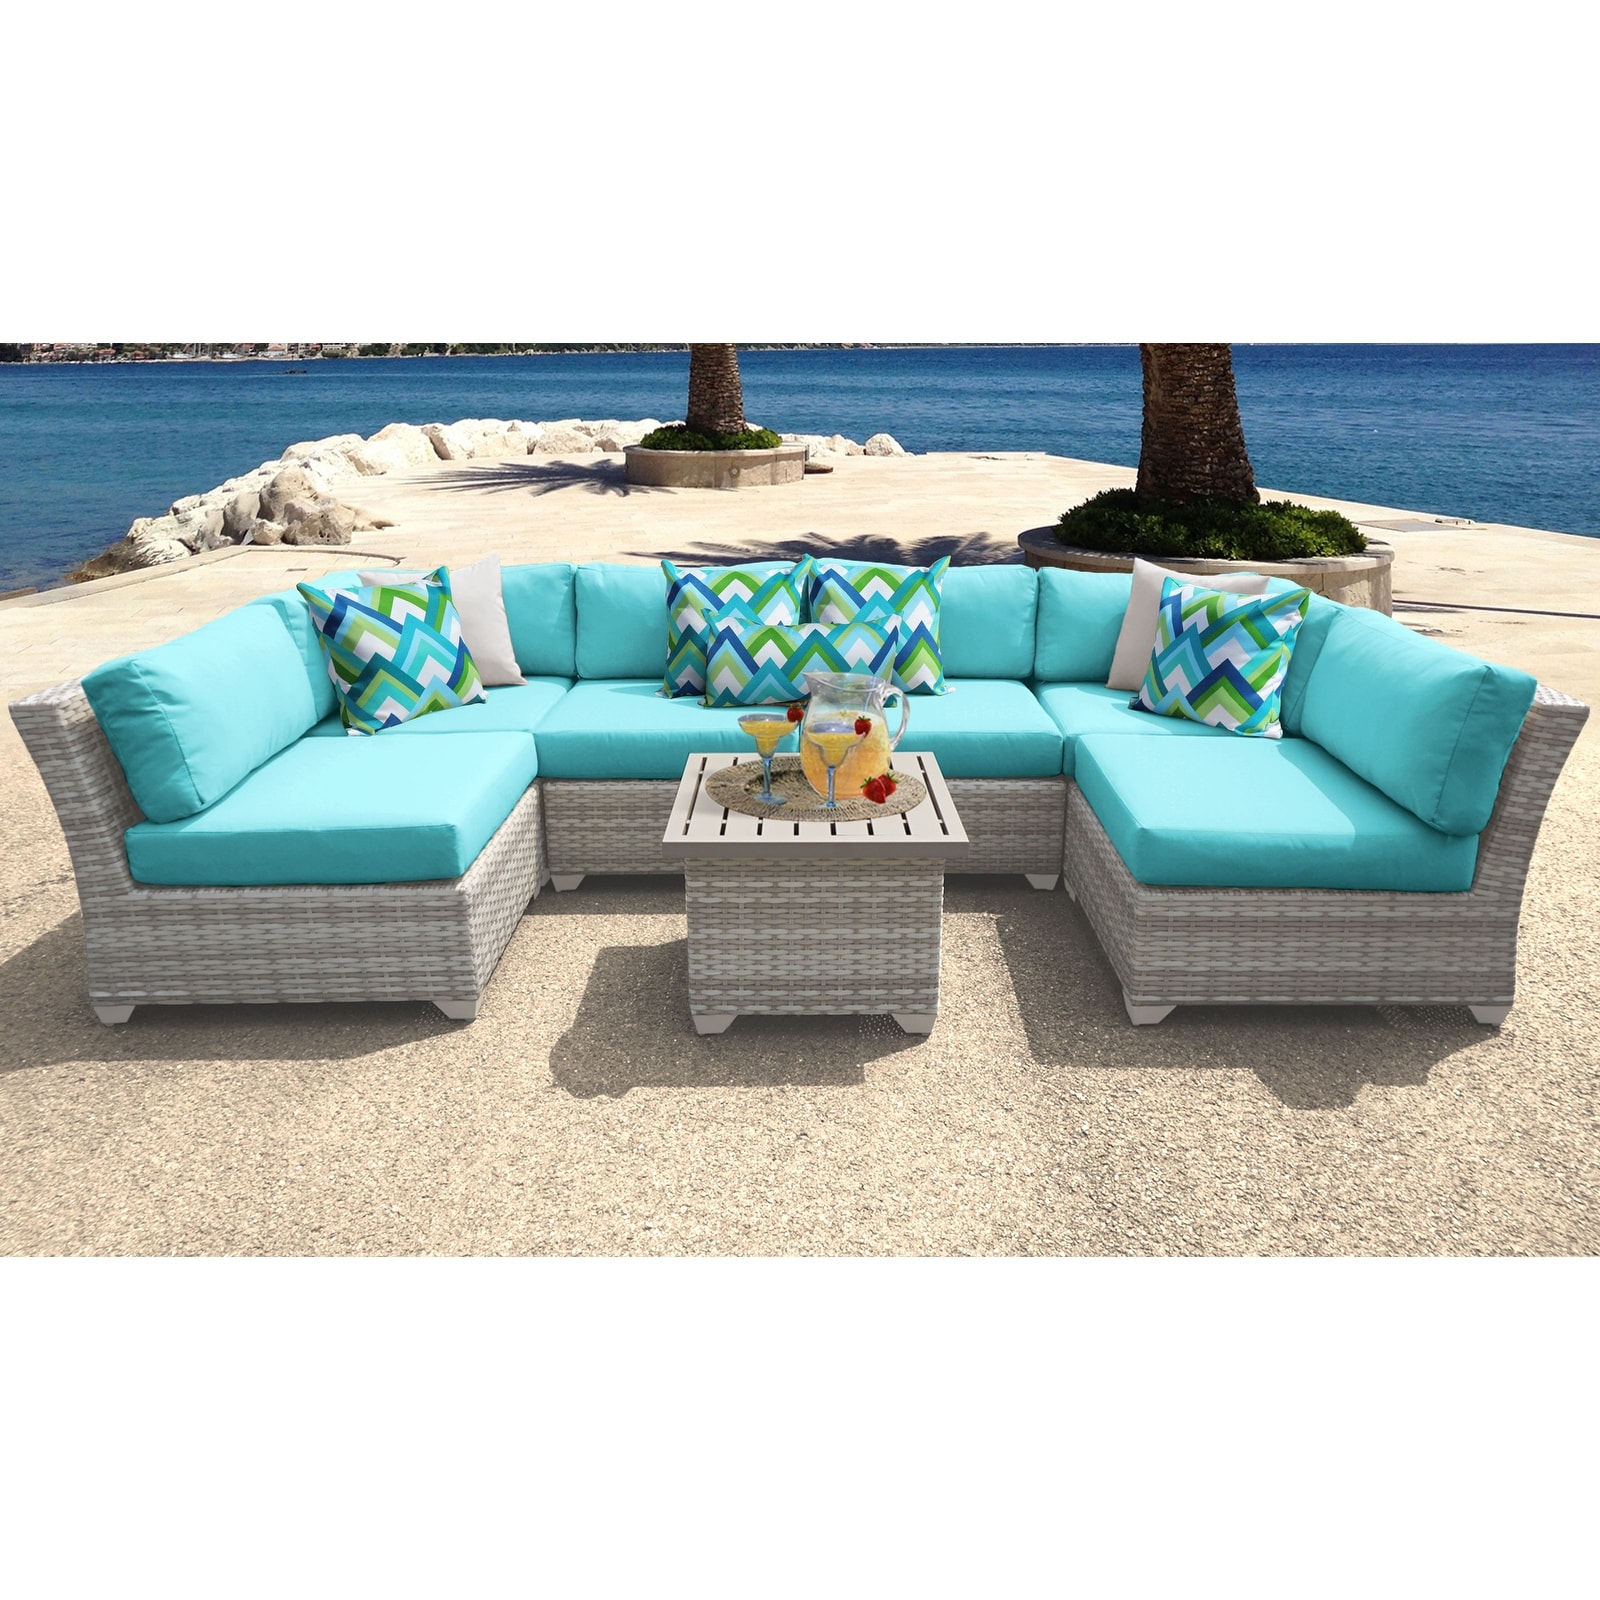 Fairmont 7-pc. Outdoor Wicker Furniture Set